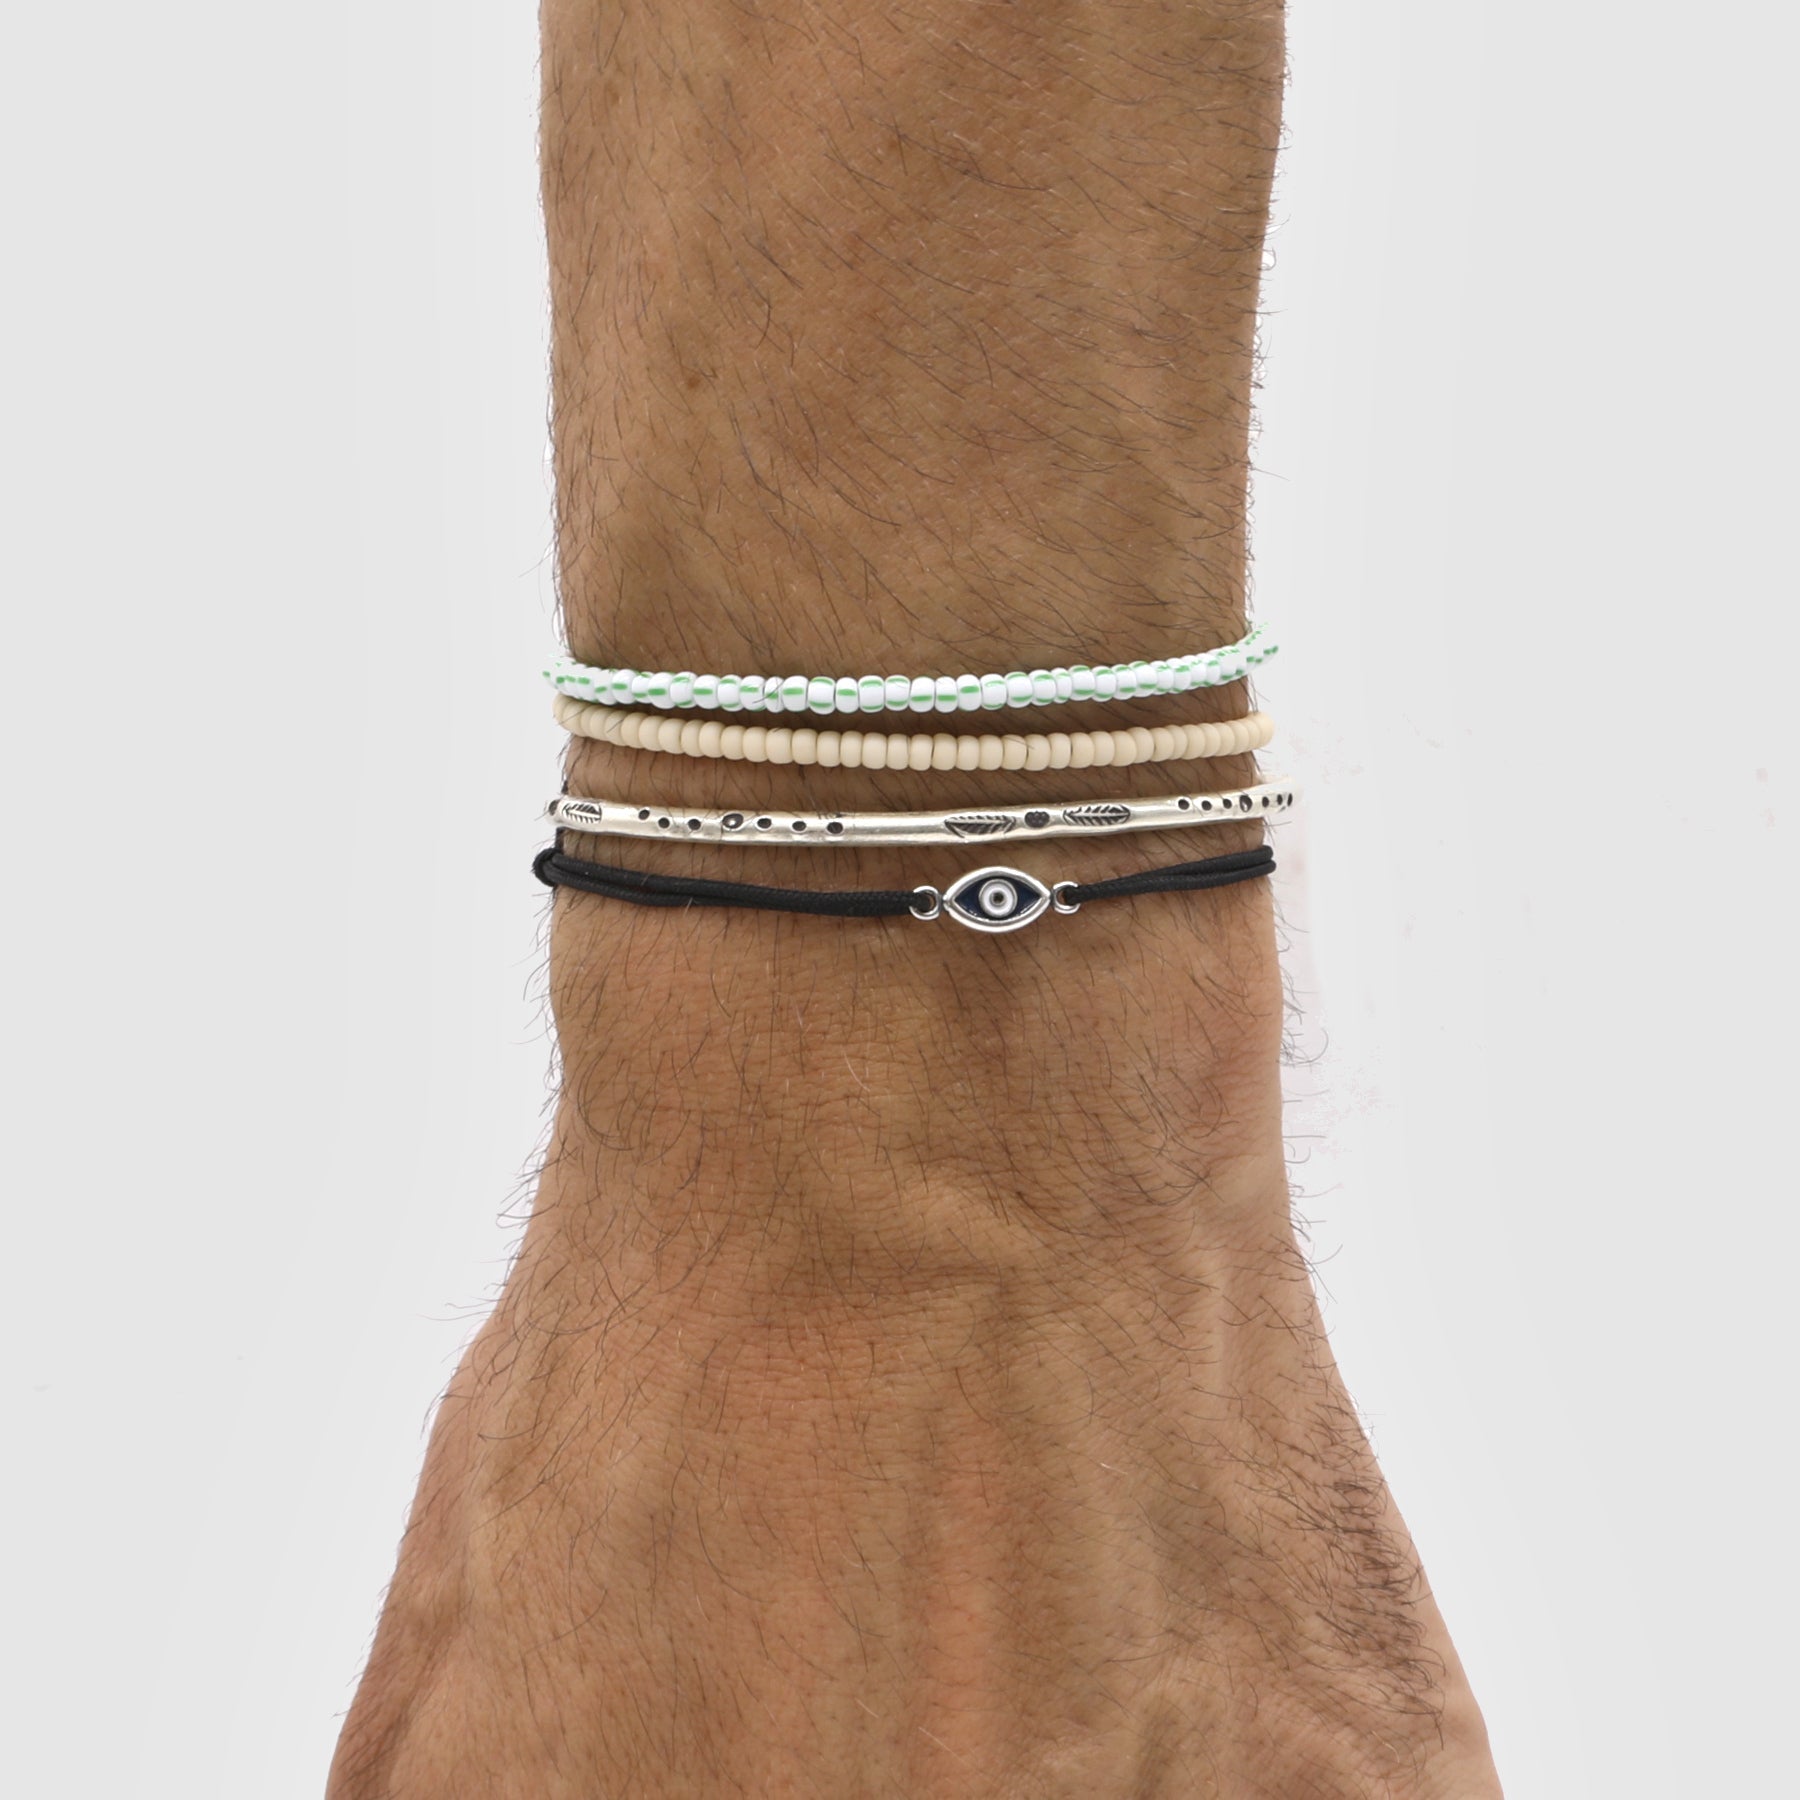 2mm Glass Beads Adjustable Bracelet (Cream)-Bracelet-Kompsós